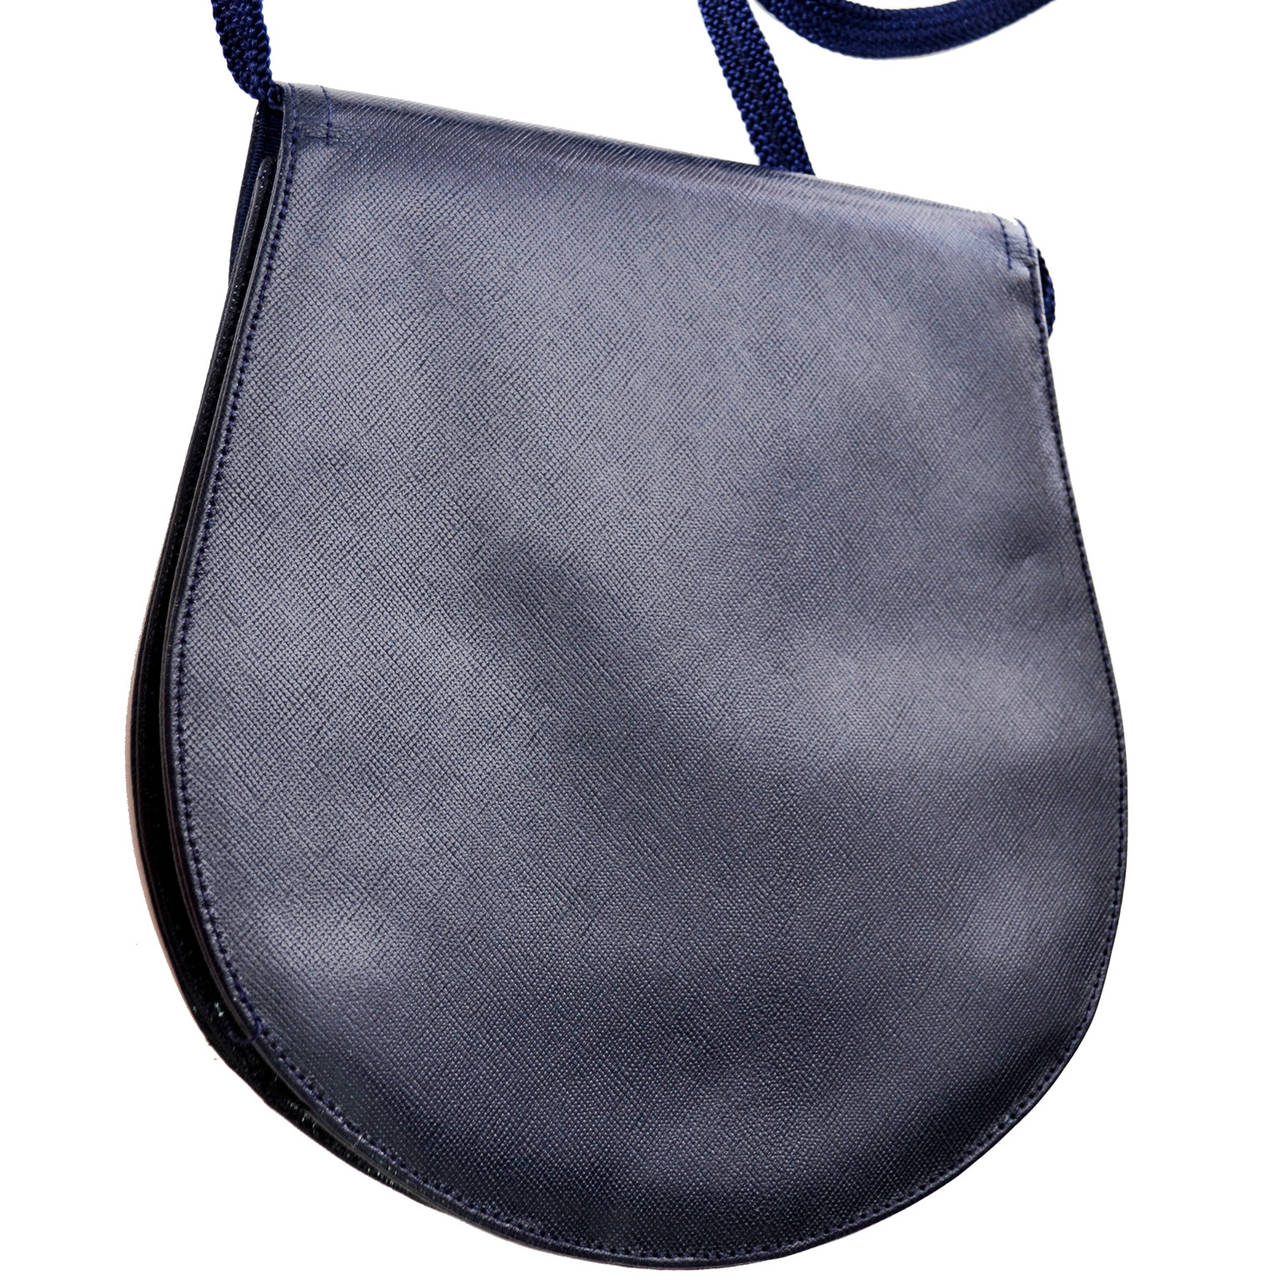 Yves Saint Laurent Rive Gauche 1970s Vintage Handbag YSL Shoulder Bag